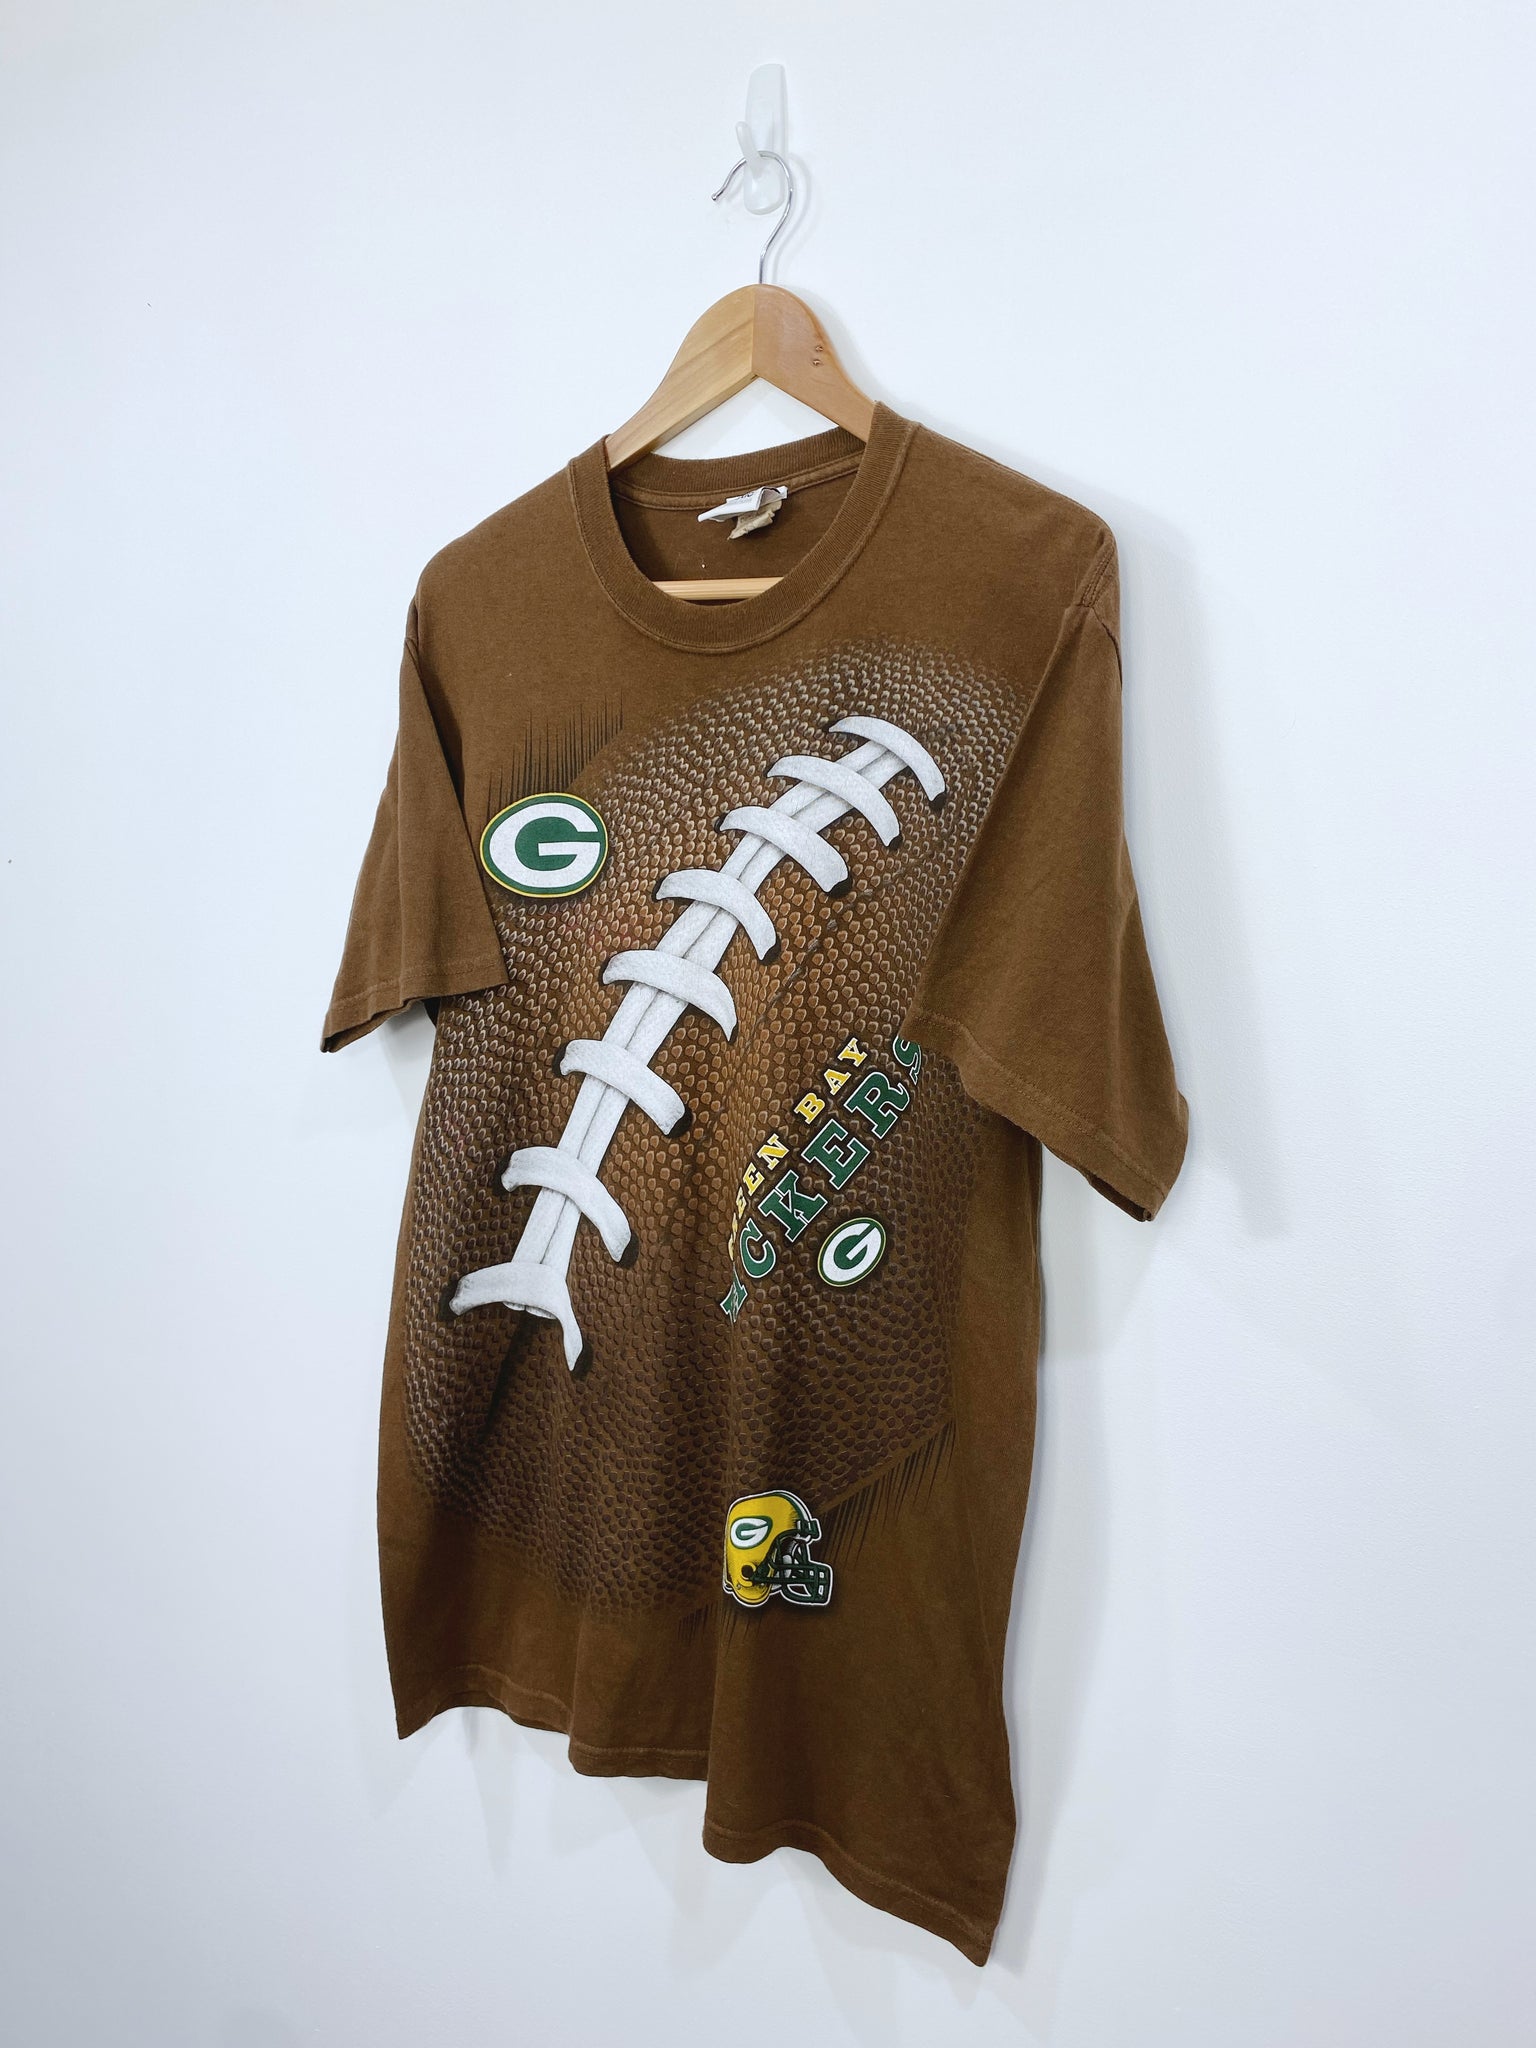 Vintage GreenBay Packers T-shirt L